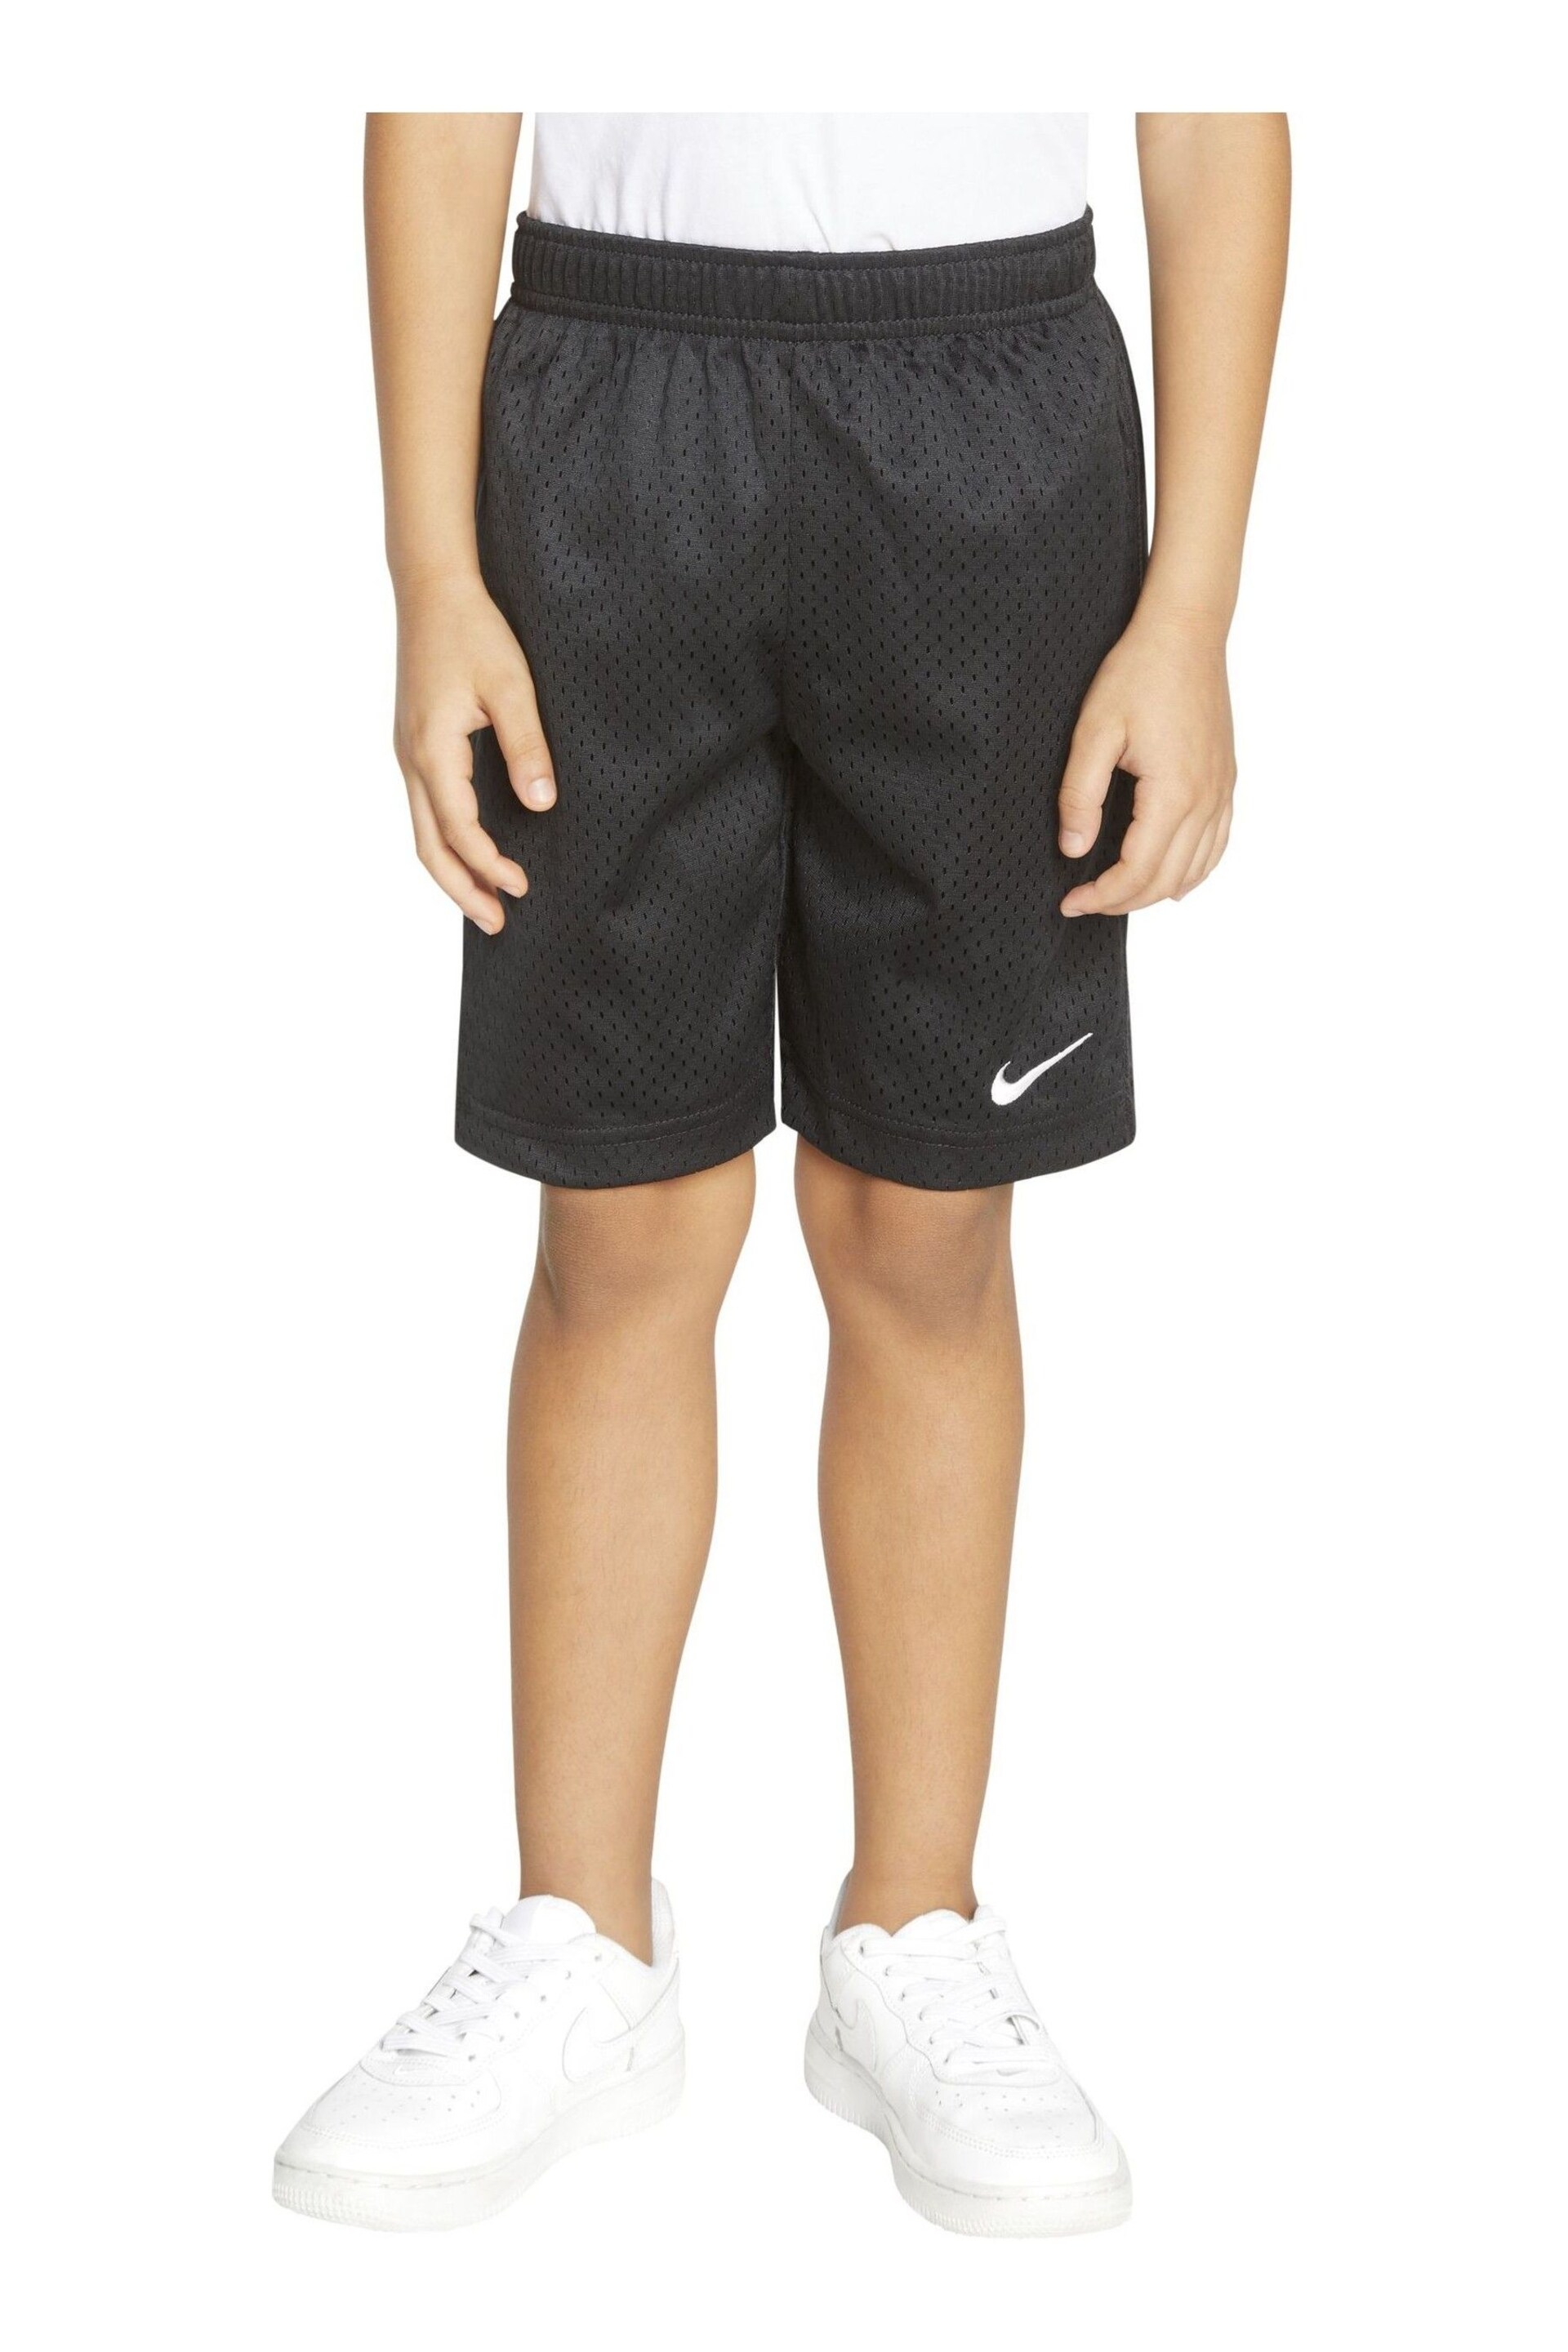 Nike Black Little Kids Mesh Shorts - Image 1 of 2